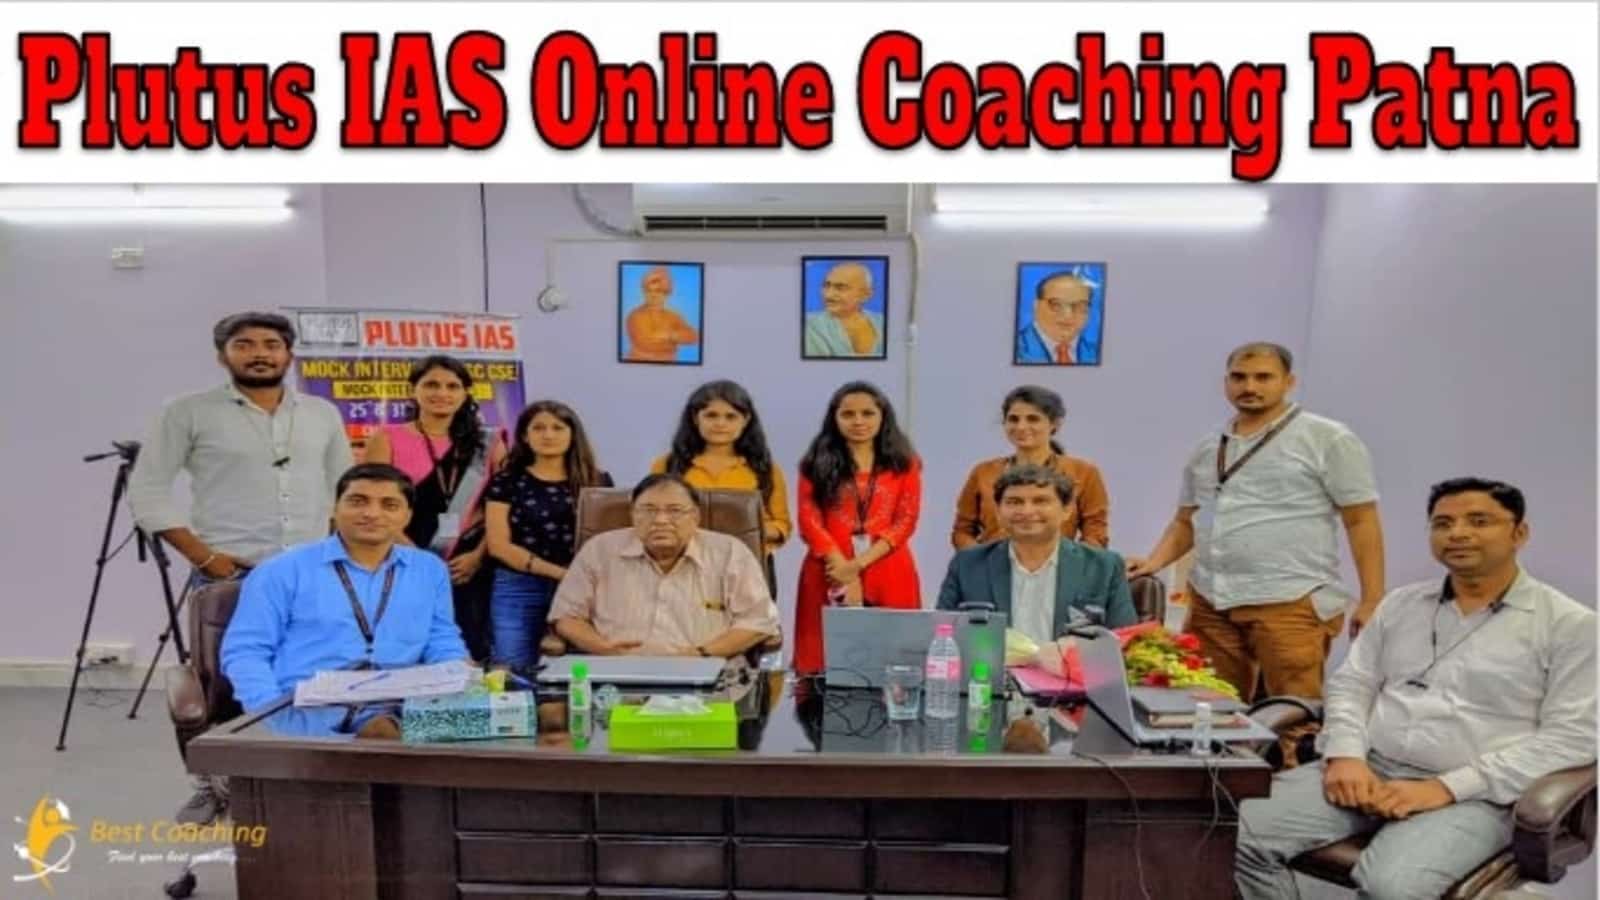 Plutus IAS Online Coaching Patna